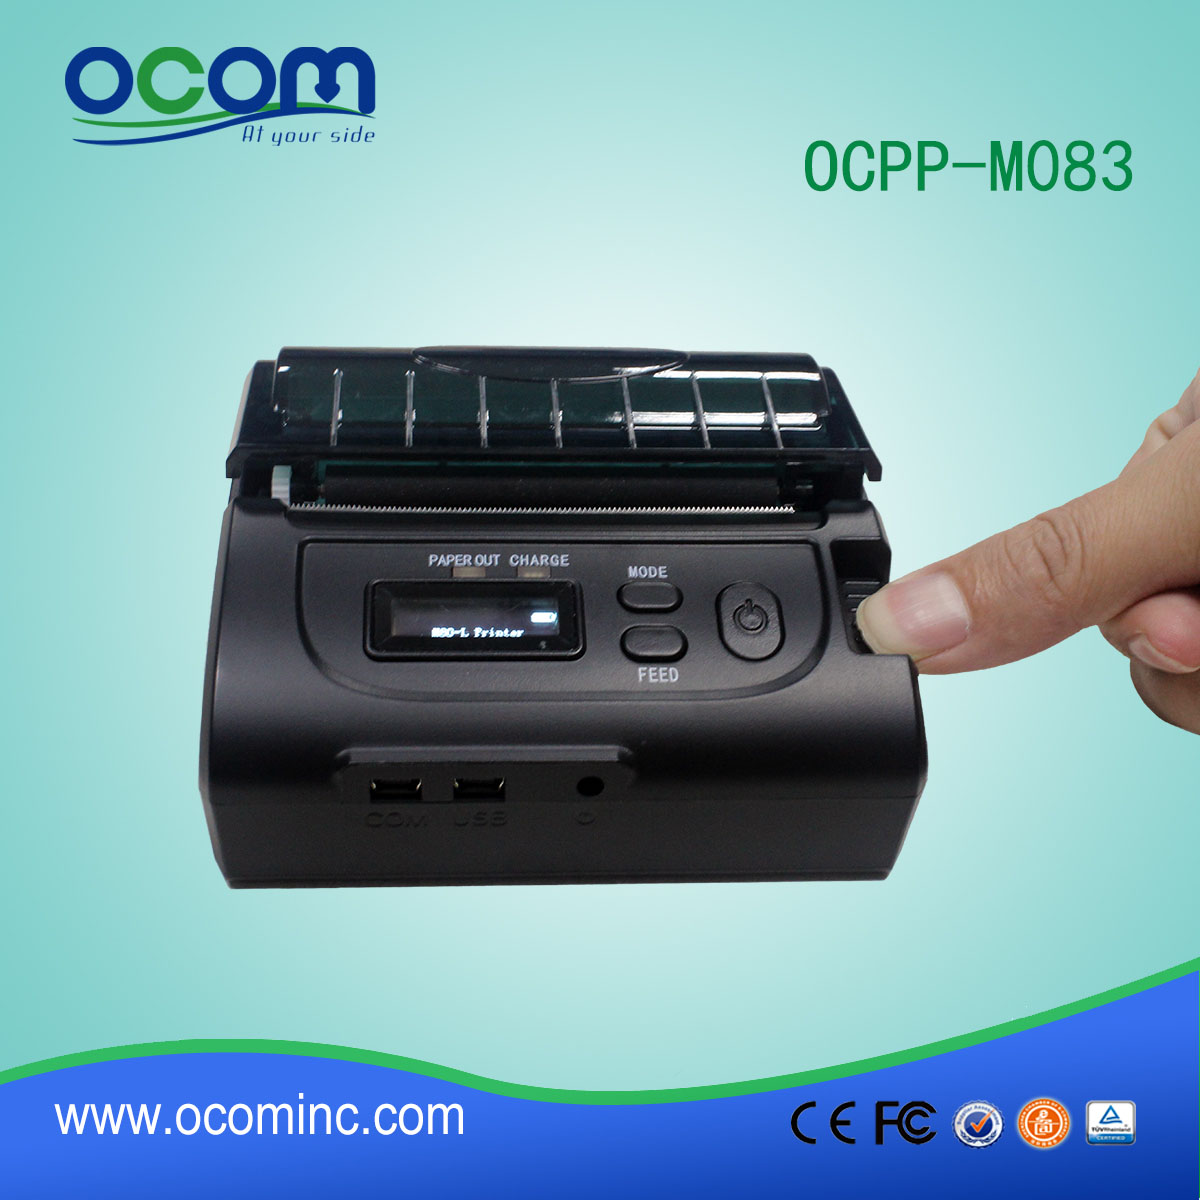 Cena drukarki mobilnej Bluetooth mobilnej OCPP-M083 Pos